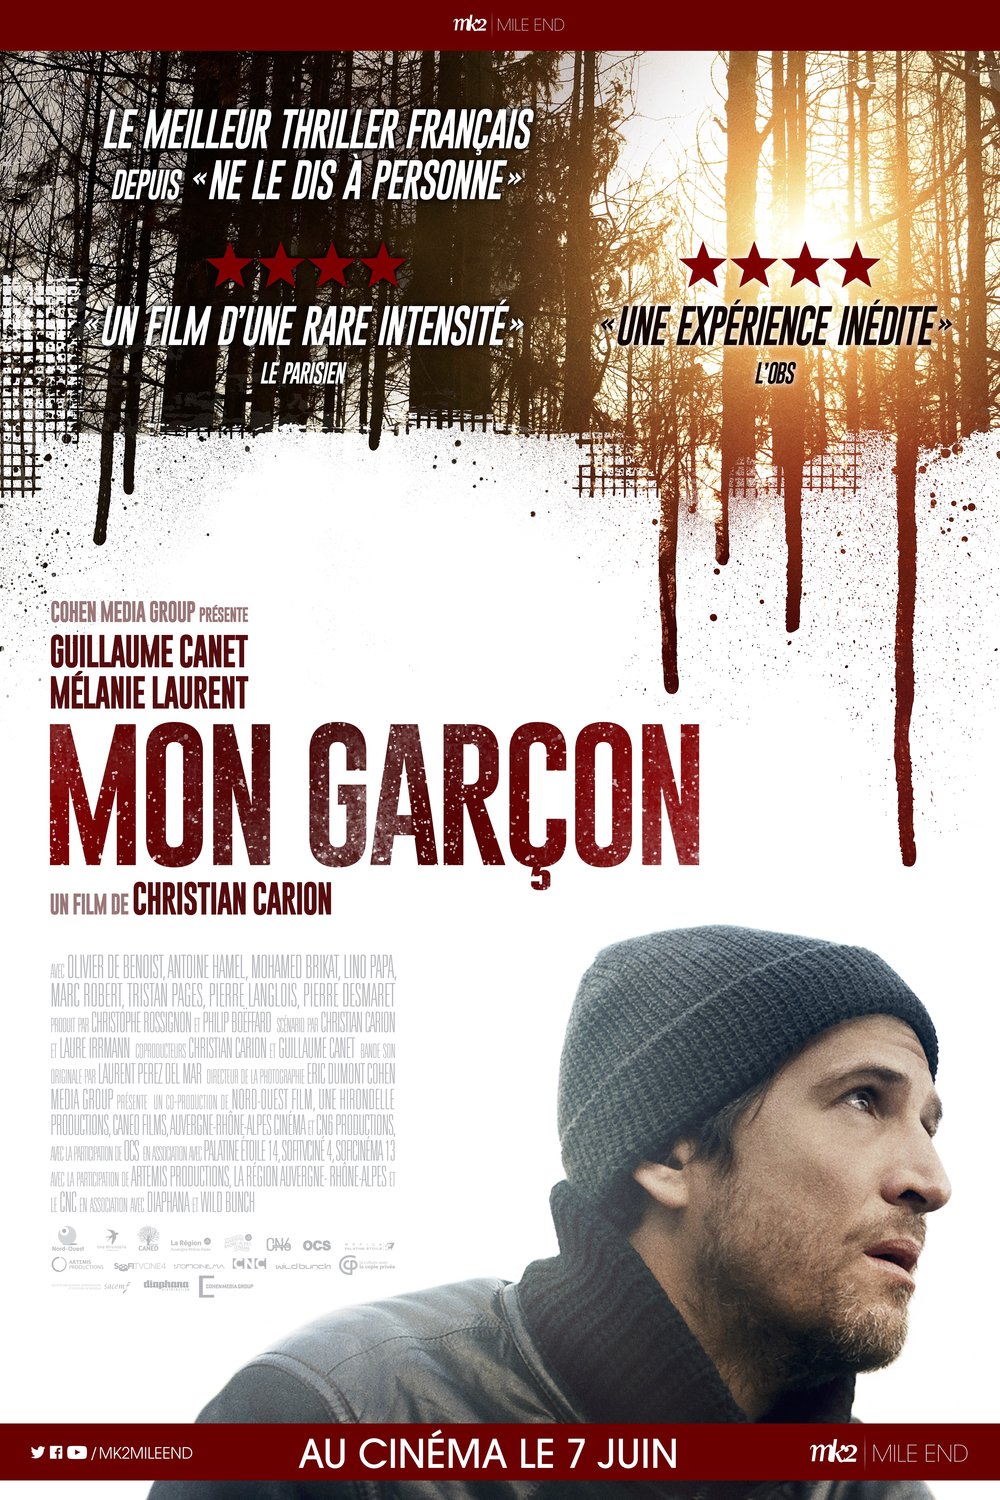 Poster of the movie Mon garçon